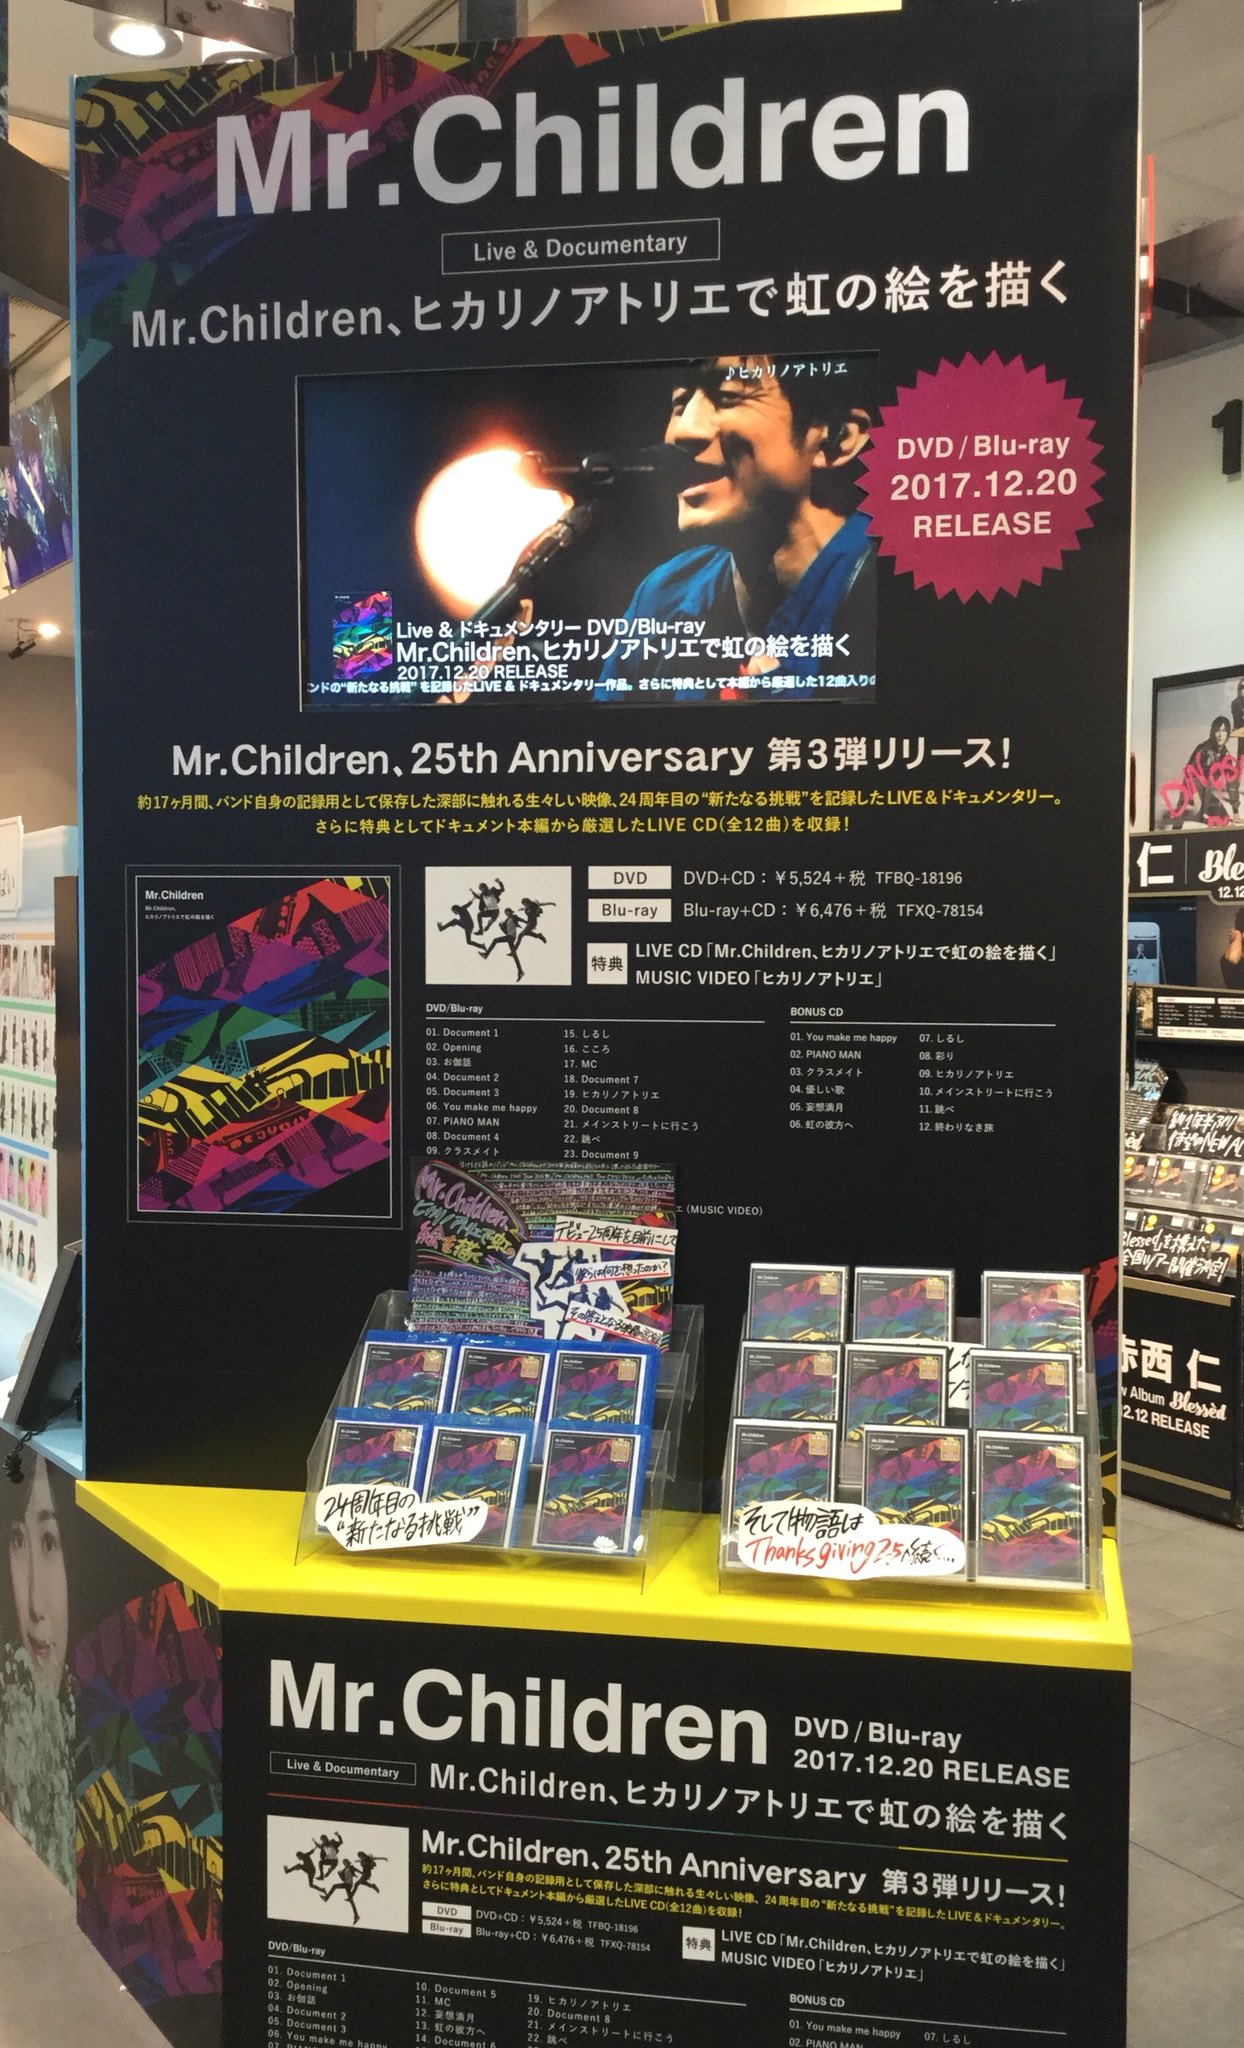 Shibuya Tsutaya Music Movie 本日入荷 Mr Childrenのライブ Amp ドキュメンタリー作品 Mr Children ヒカリノアトリエで虹の絵を描く が発売 バンド自身の記録用として保存されていた映像 24周年目の 新たなる挑戦 を記録した 本編134分の作品